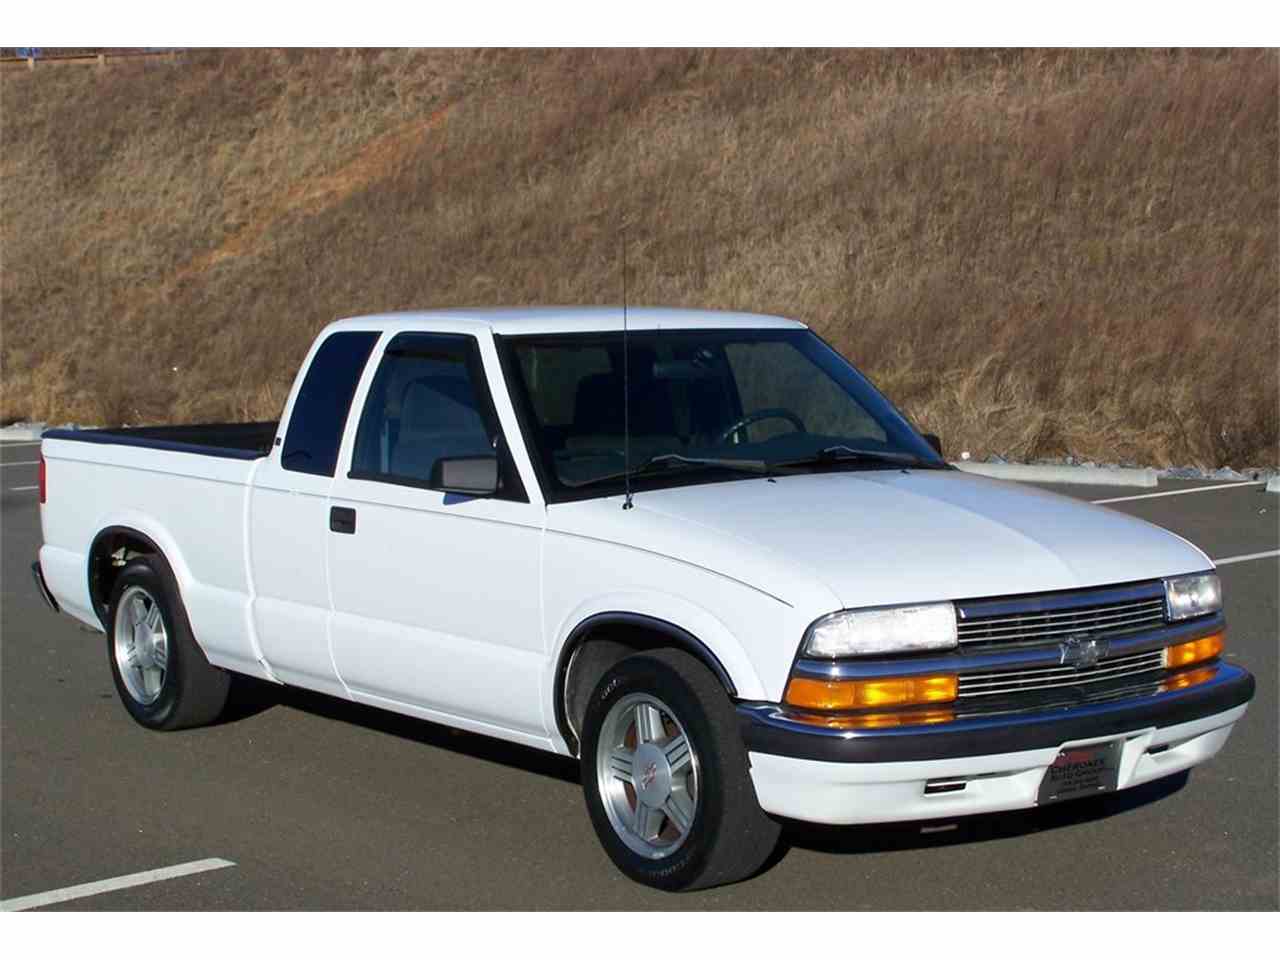 1998 Chevrolet S10 for Sale | ClassicCars.com | CC-1060749